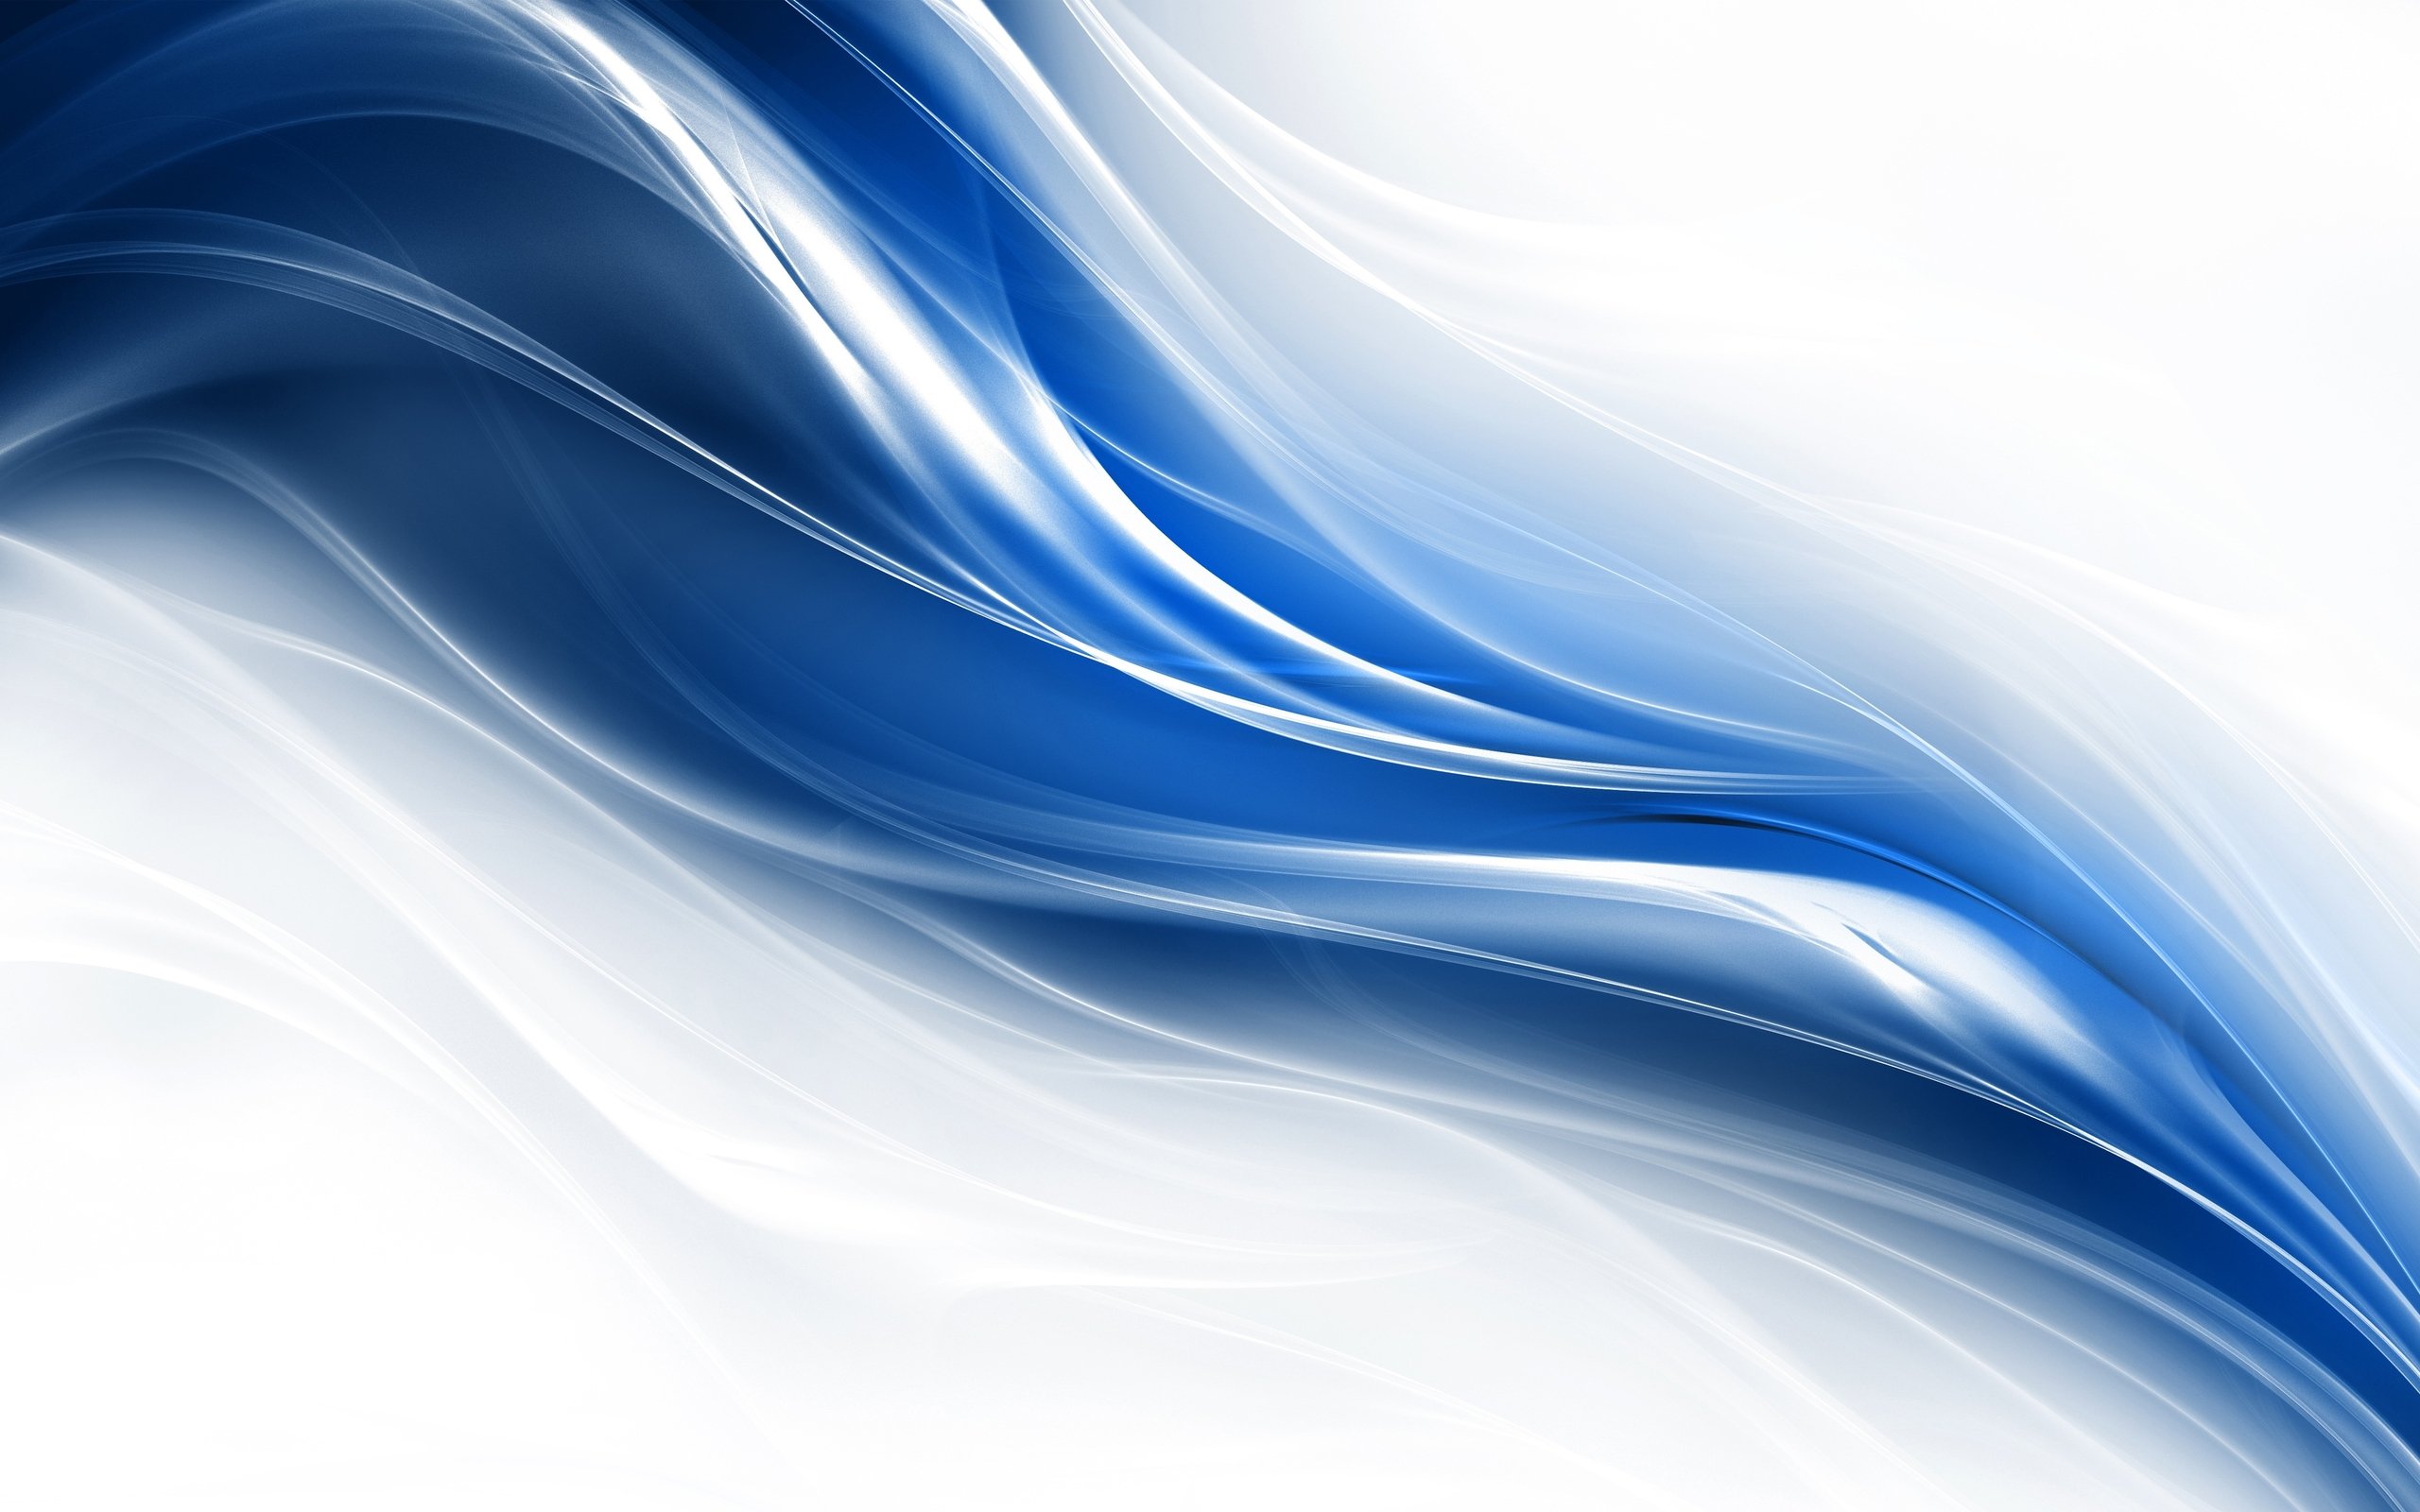 Liquid Fractal Blue Wave Wallpapers   2560x1600   1795442